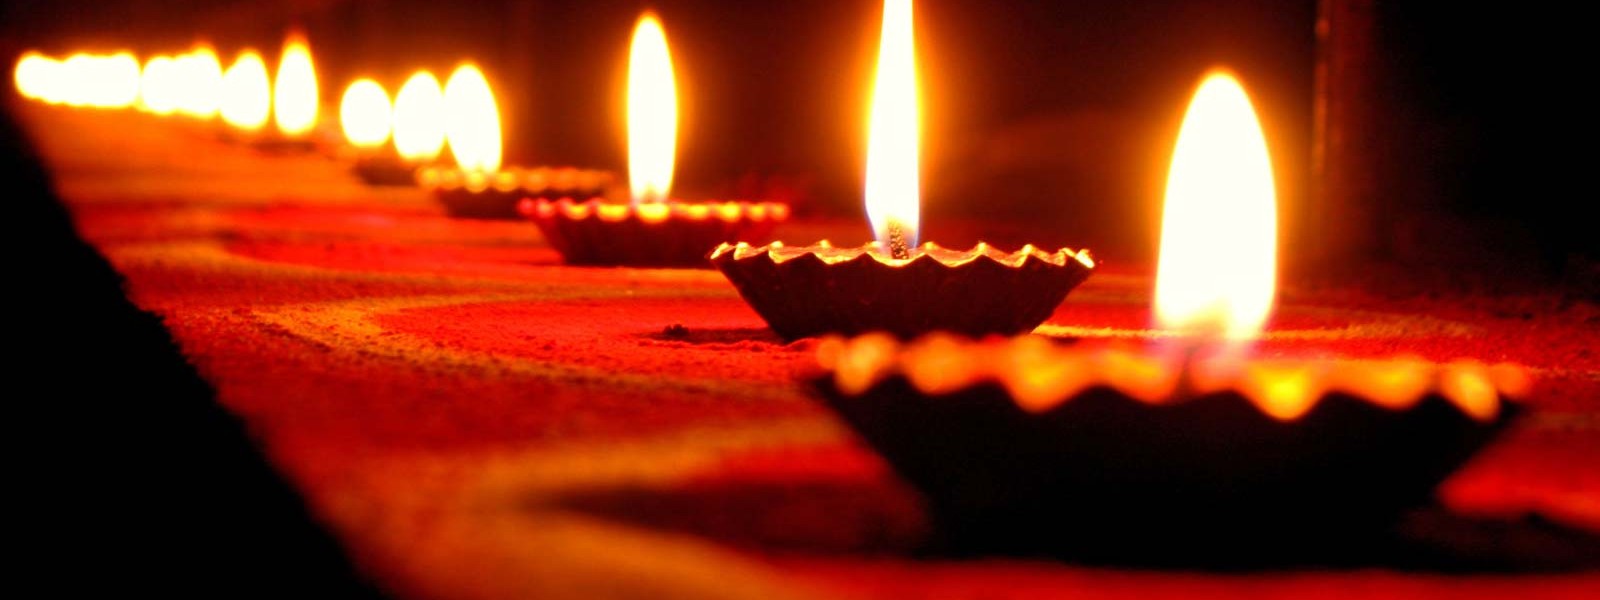 Celebrate Diwali indoors, urges Nuwara Eliya District Secretary